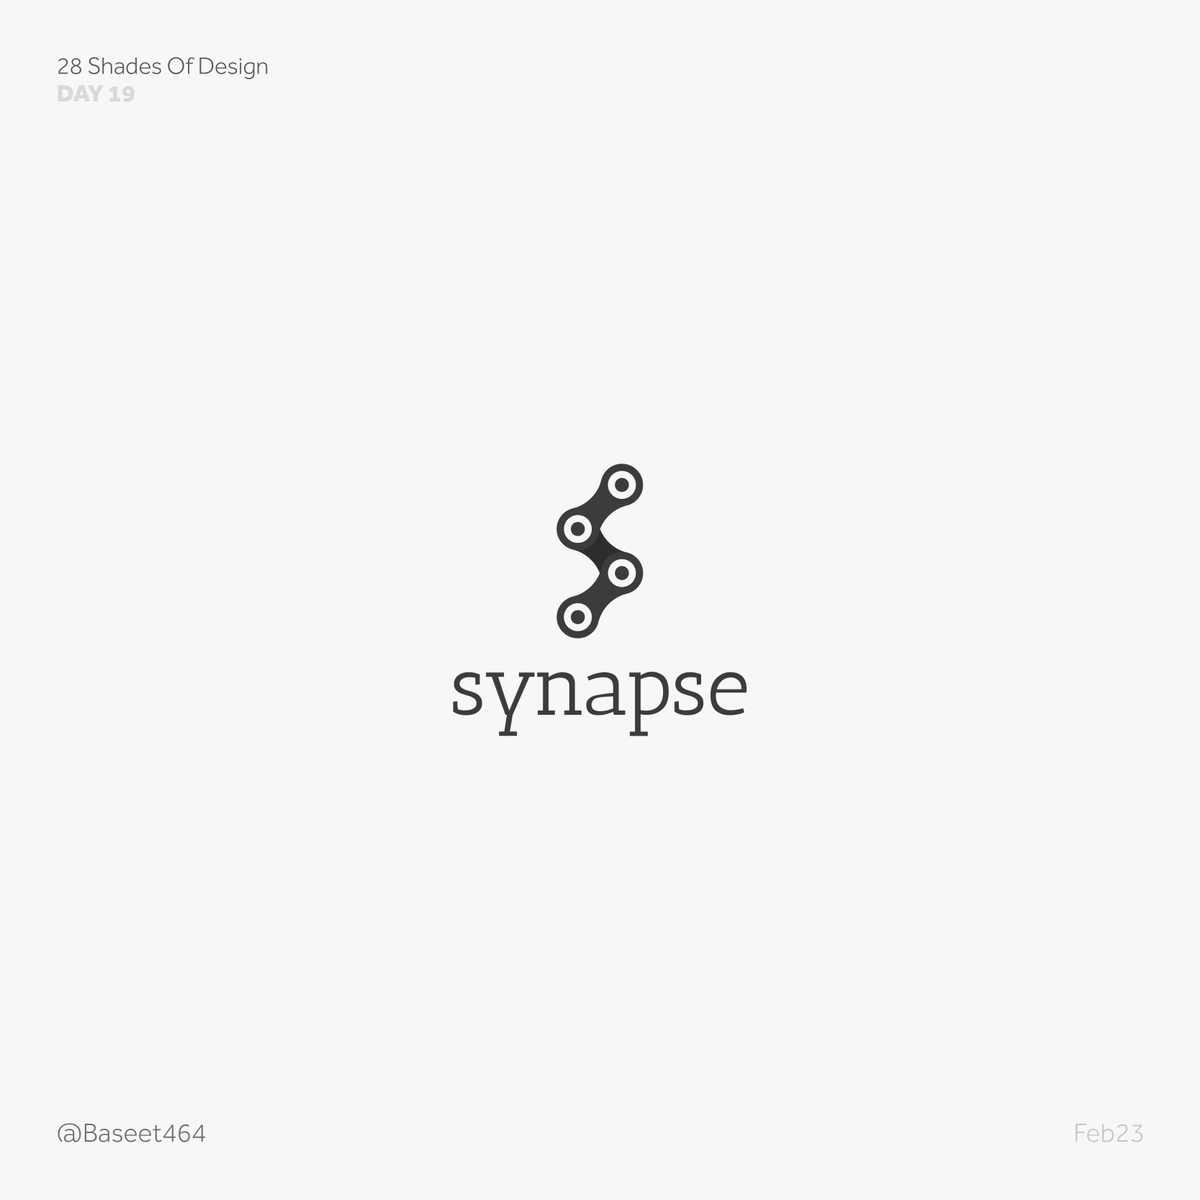 Synapse || Day 19
#Feb23 Challenge 
#28ShadesOfDesign
.
.
.
#logotypedesign #rebranding #designlogo #logocreator #logoinspiration #mockups #brandidentity #logodesigner #logomaker #graphicdesigner